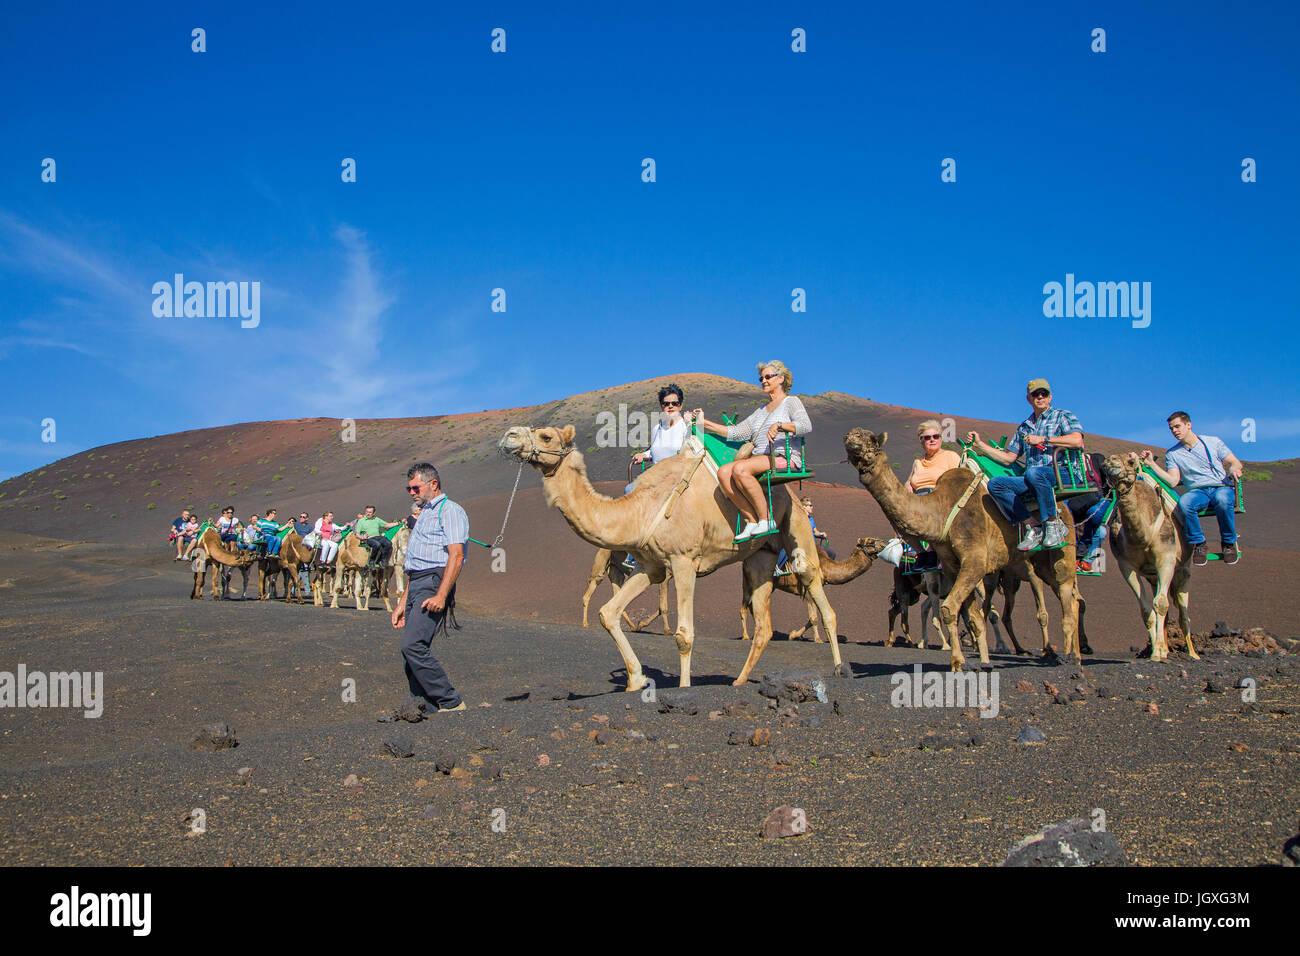 Touristen auf dromedaren, einhoeckriges kamel (camelus dromedarius) im nationalpark Timanfaya, Lanzarote, kanarische isole, Europa | i turisti su drom Foto Stock